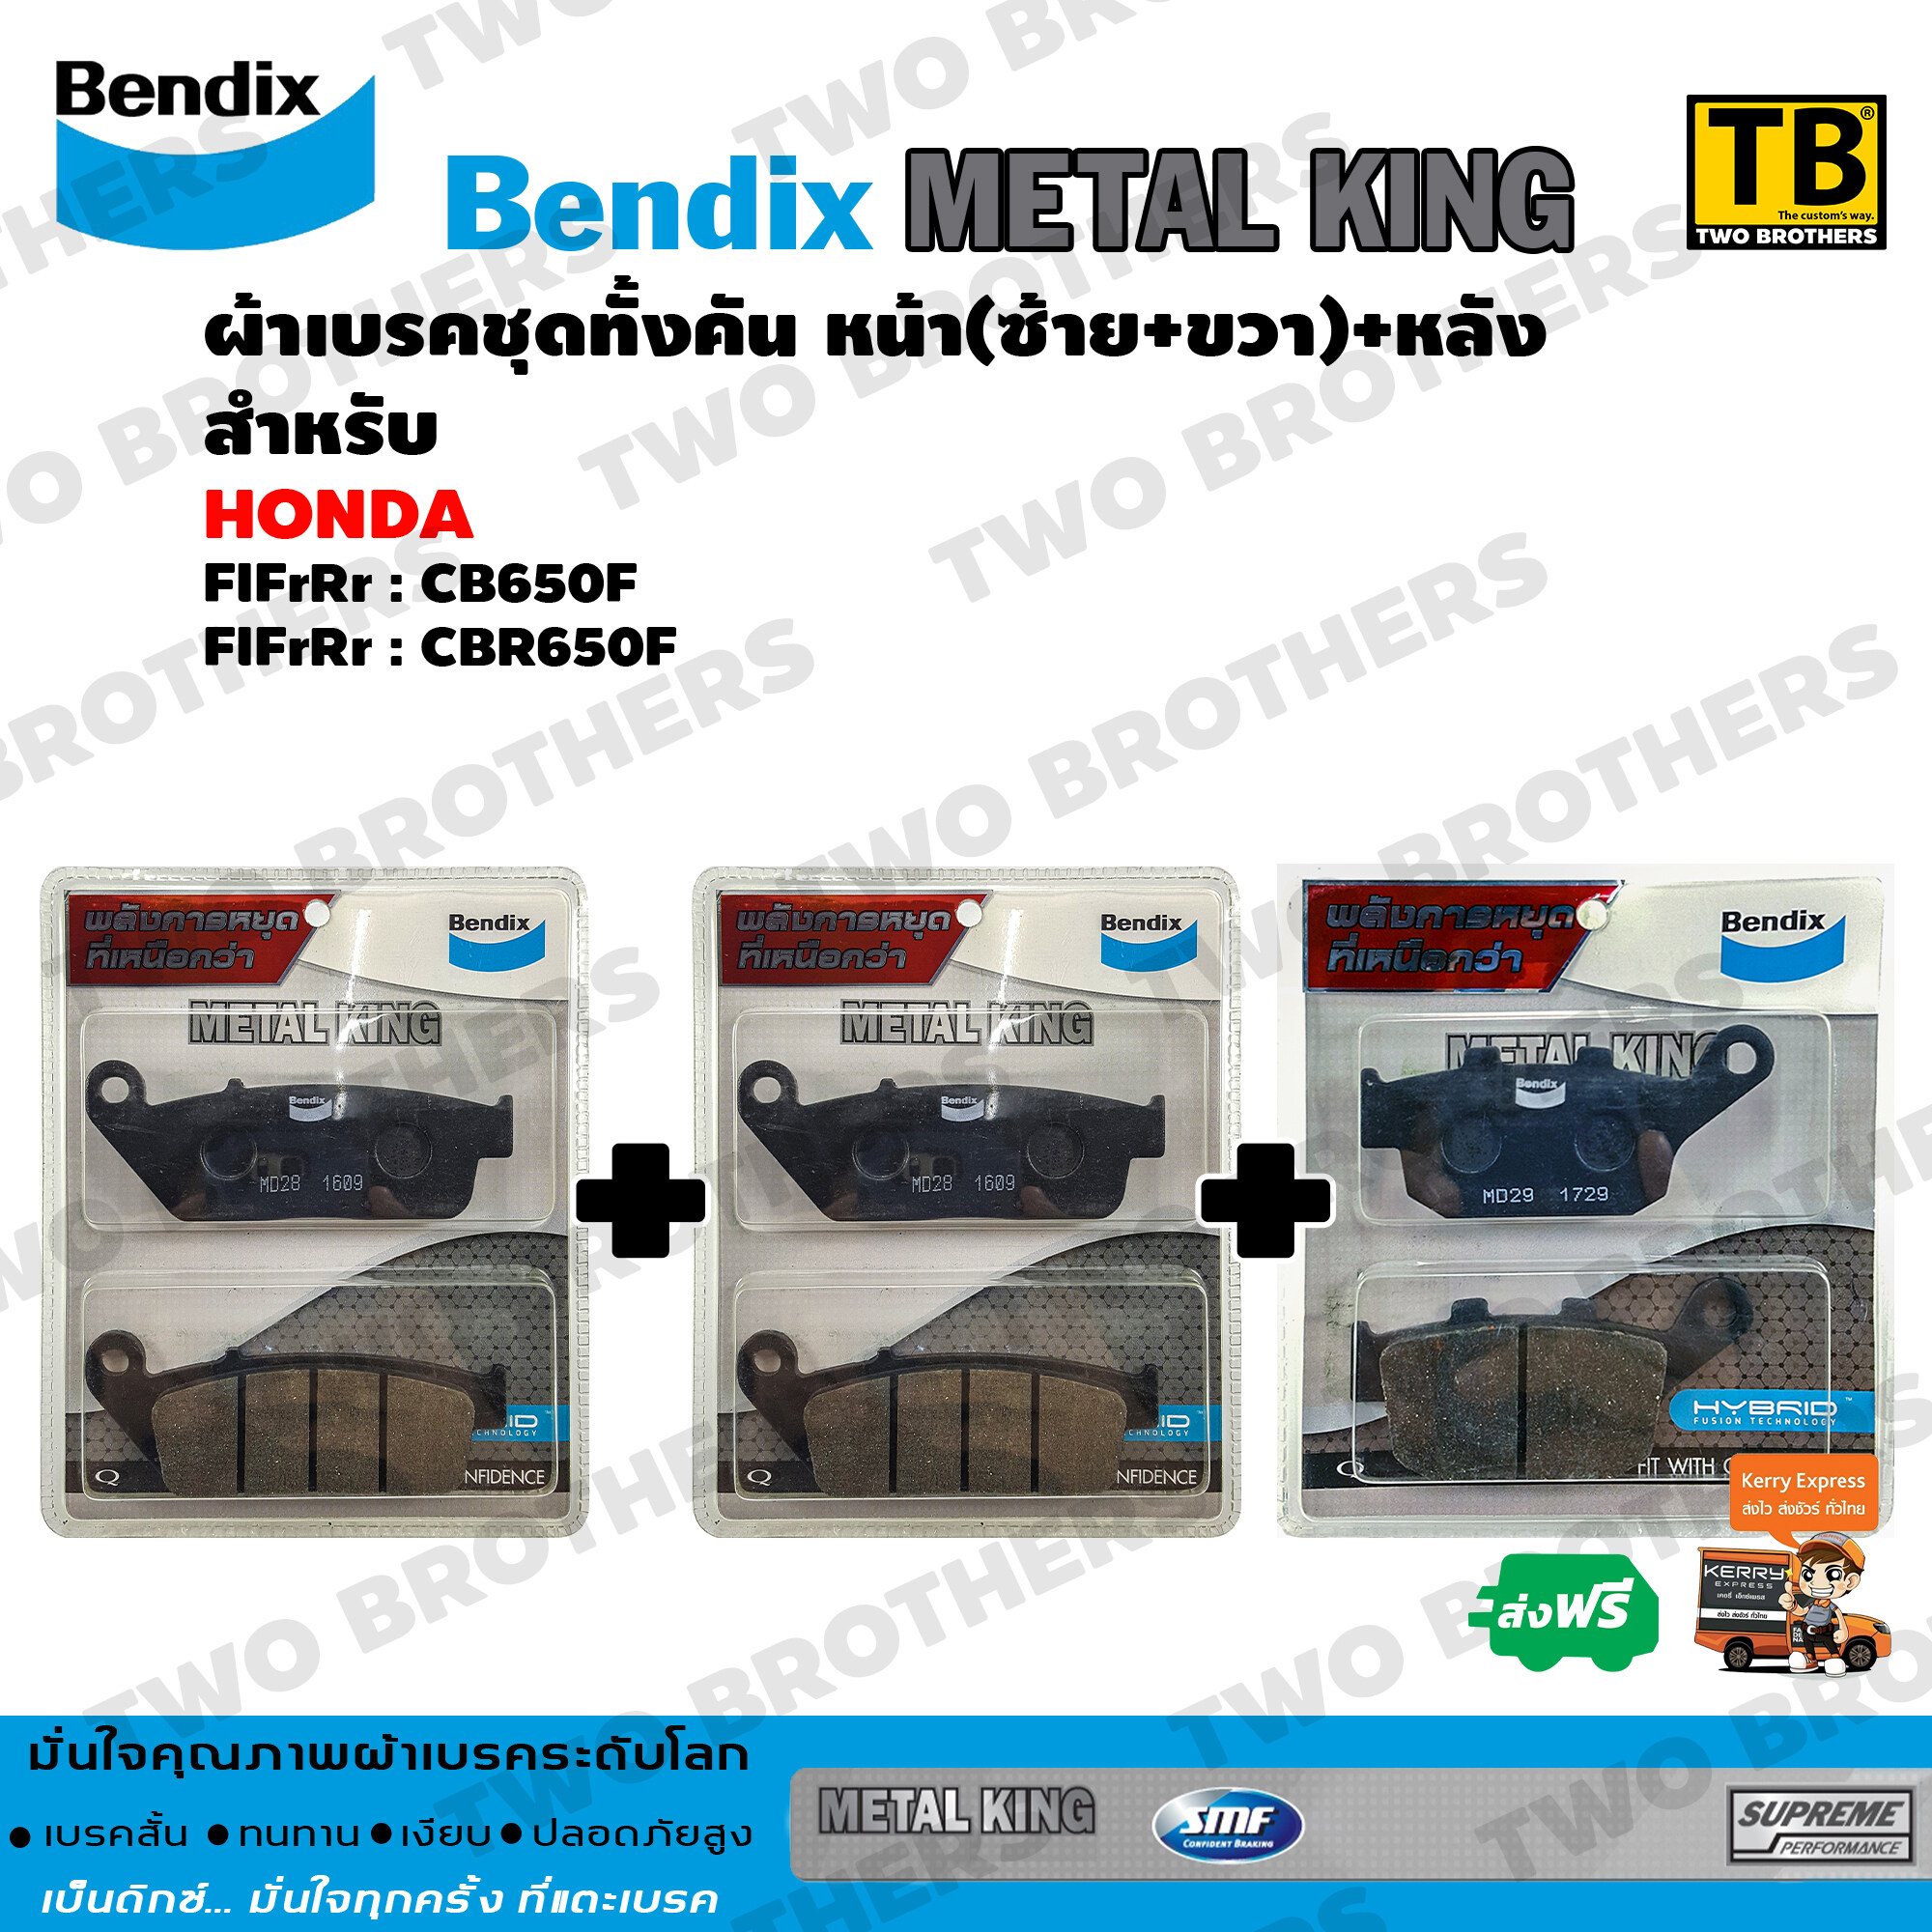 Bendix Metal King ผ้าเบรคชุดทั้งคัน CB650F, CBR650F หน้าซ้าย+หน้าขวา+หลัง  (MK28-MK28-MK29)